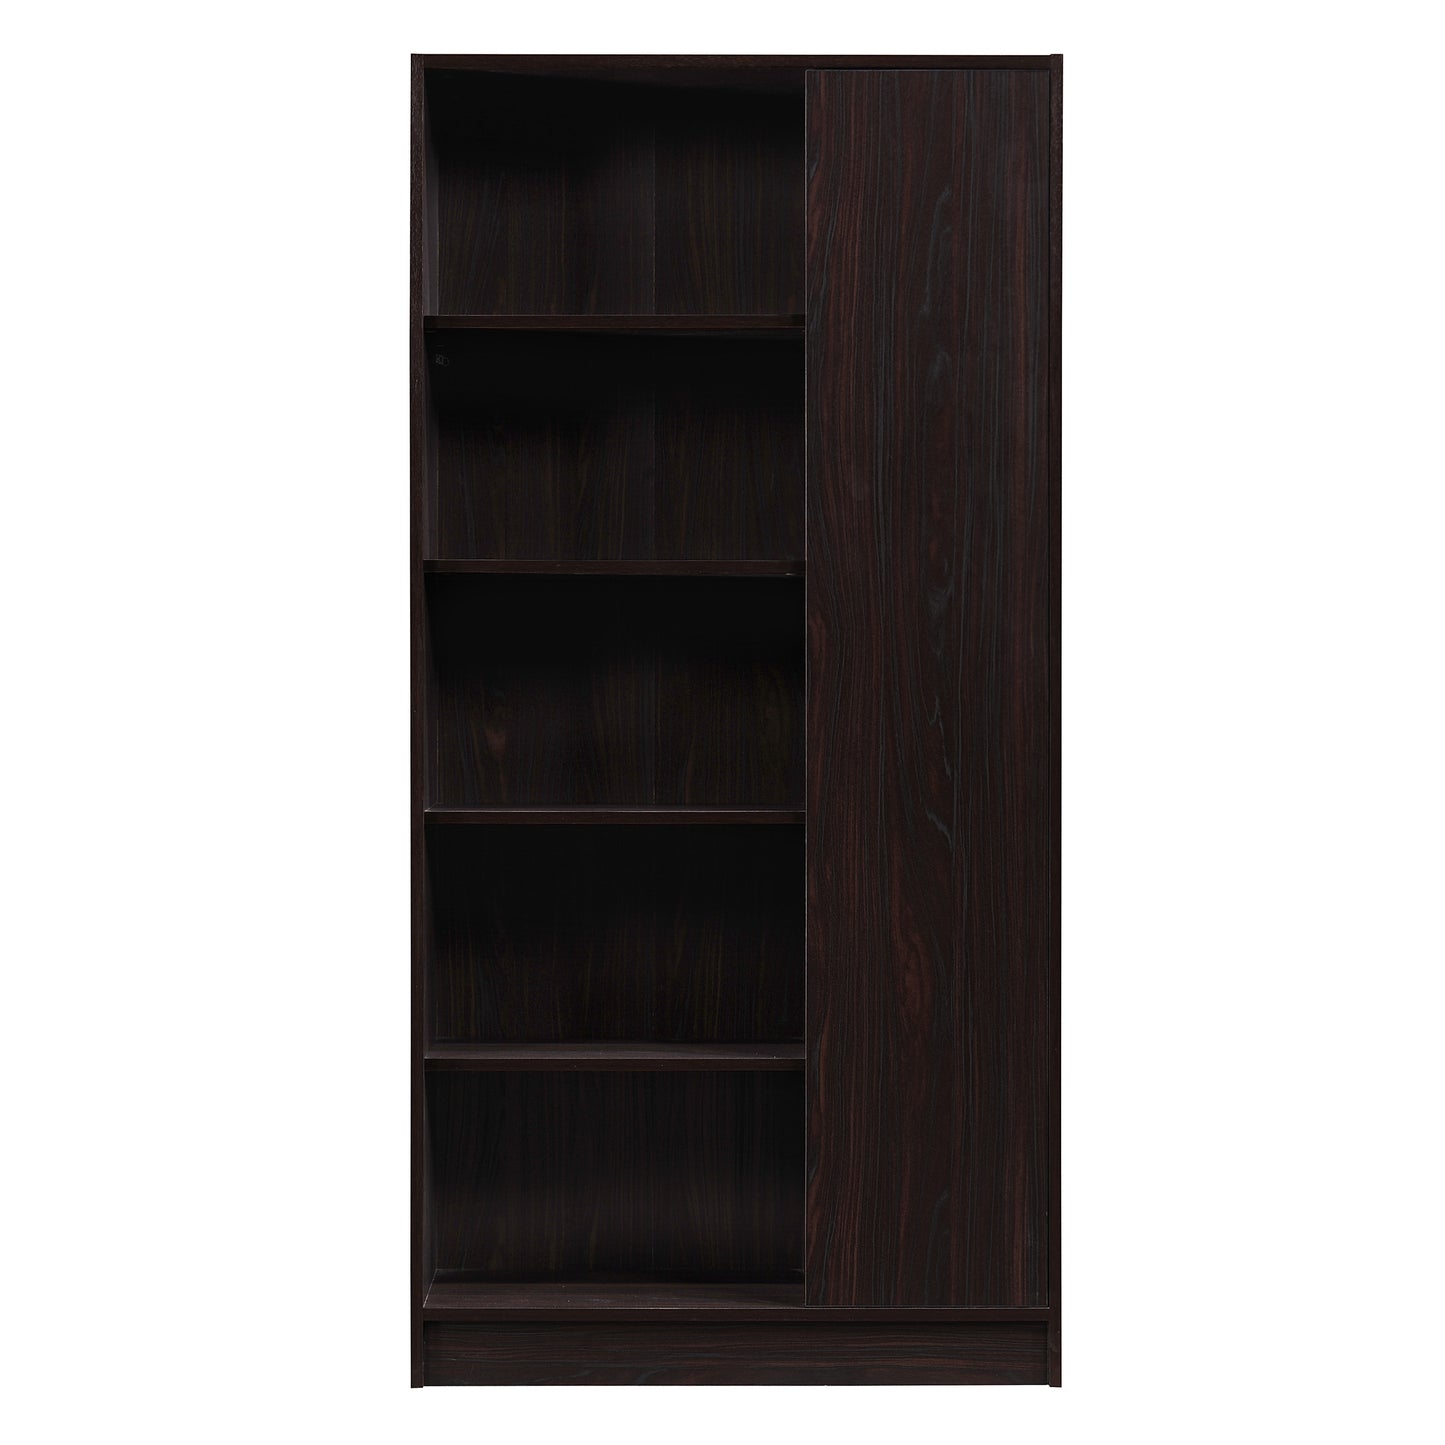 Annabelle Mid Century Modern 5-Shelf Bookcase